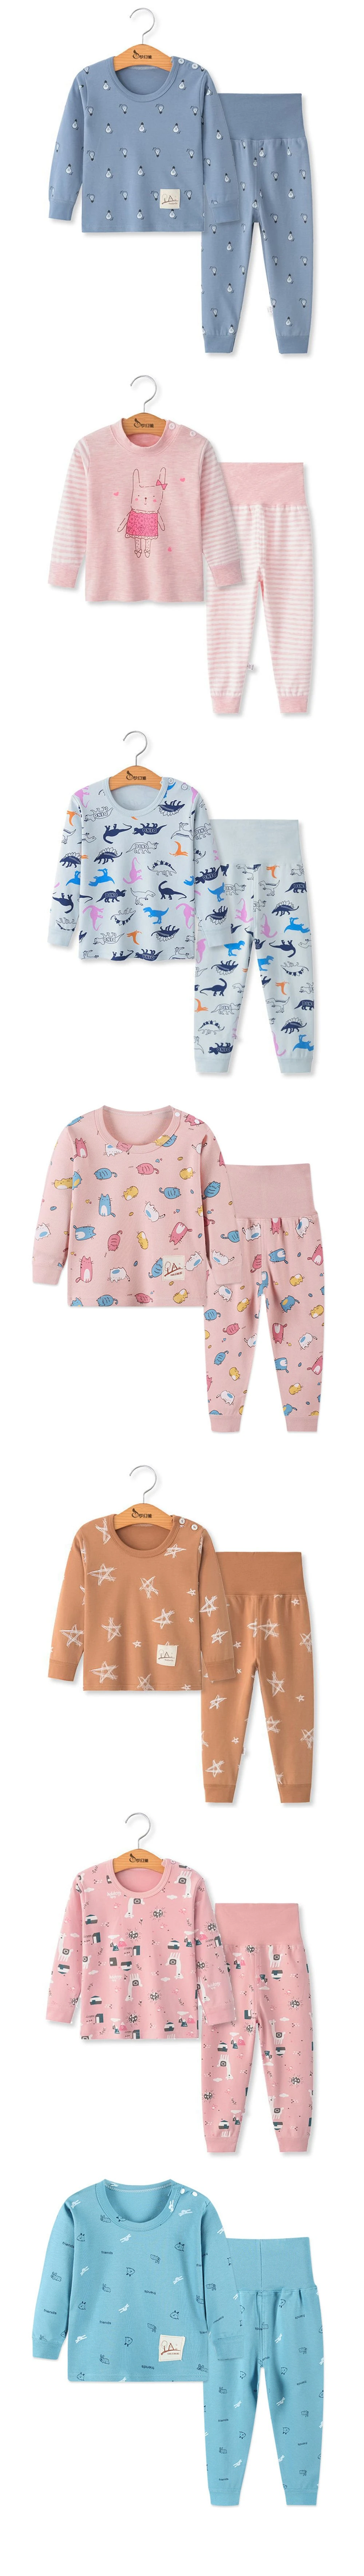 Kid's Pajamas Long Sleeve Cotton for Kids